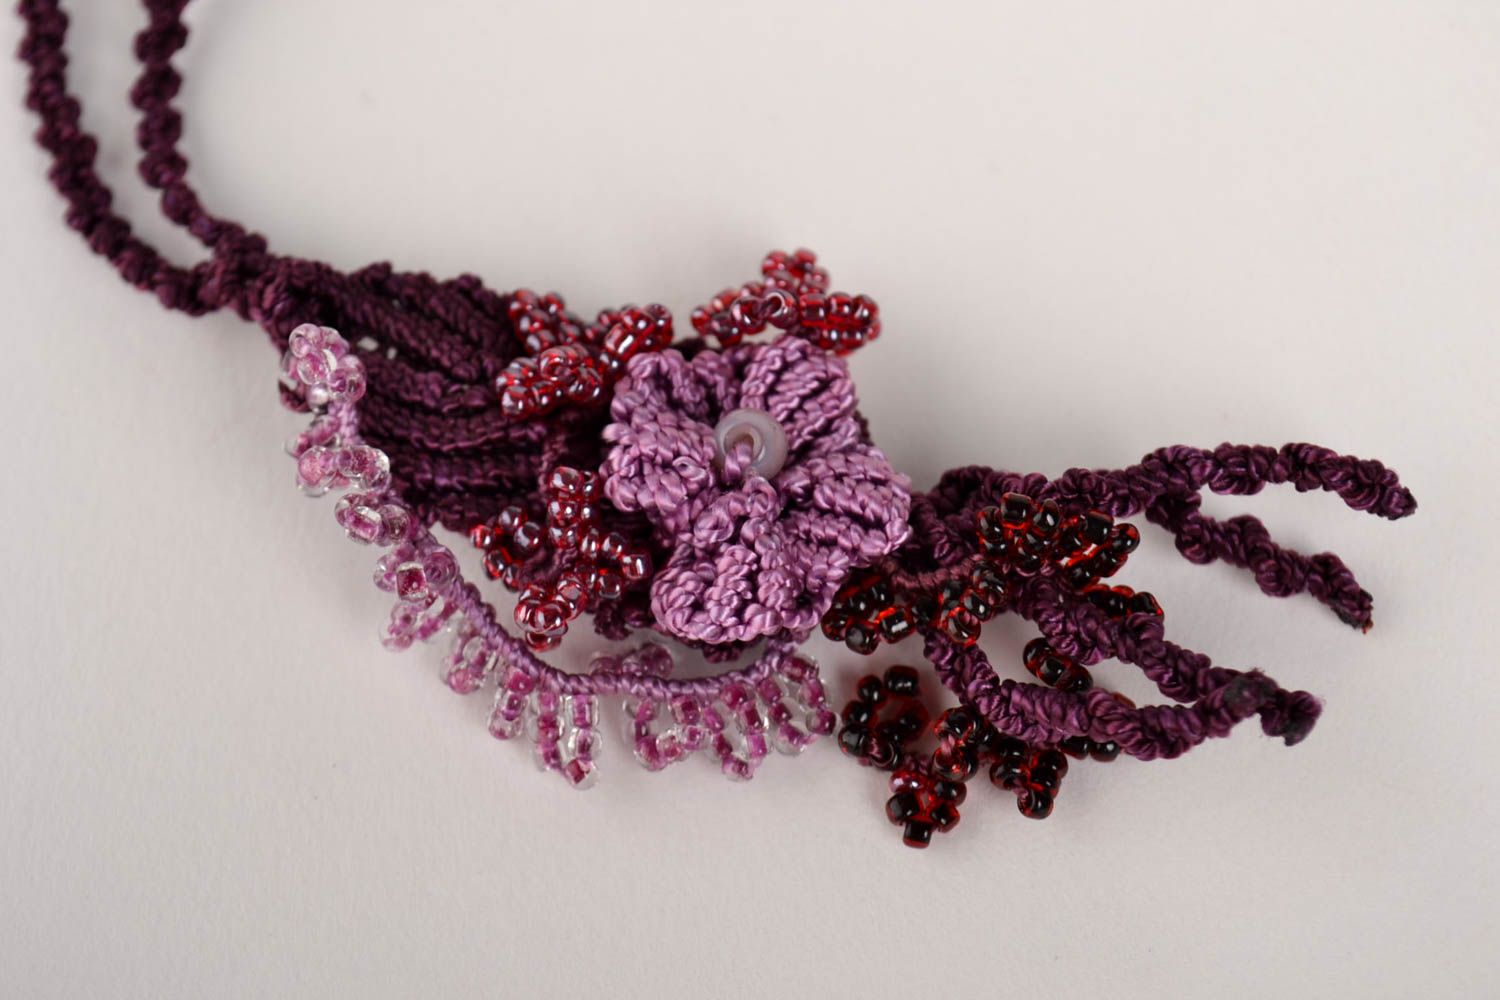 Fashion pendant handmade thread jewelry macrame bijouterie gift for women photo 2